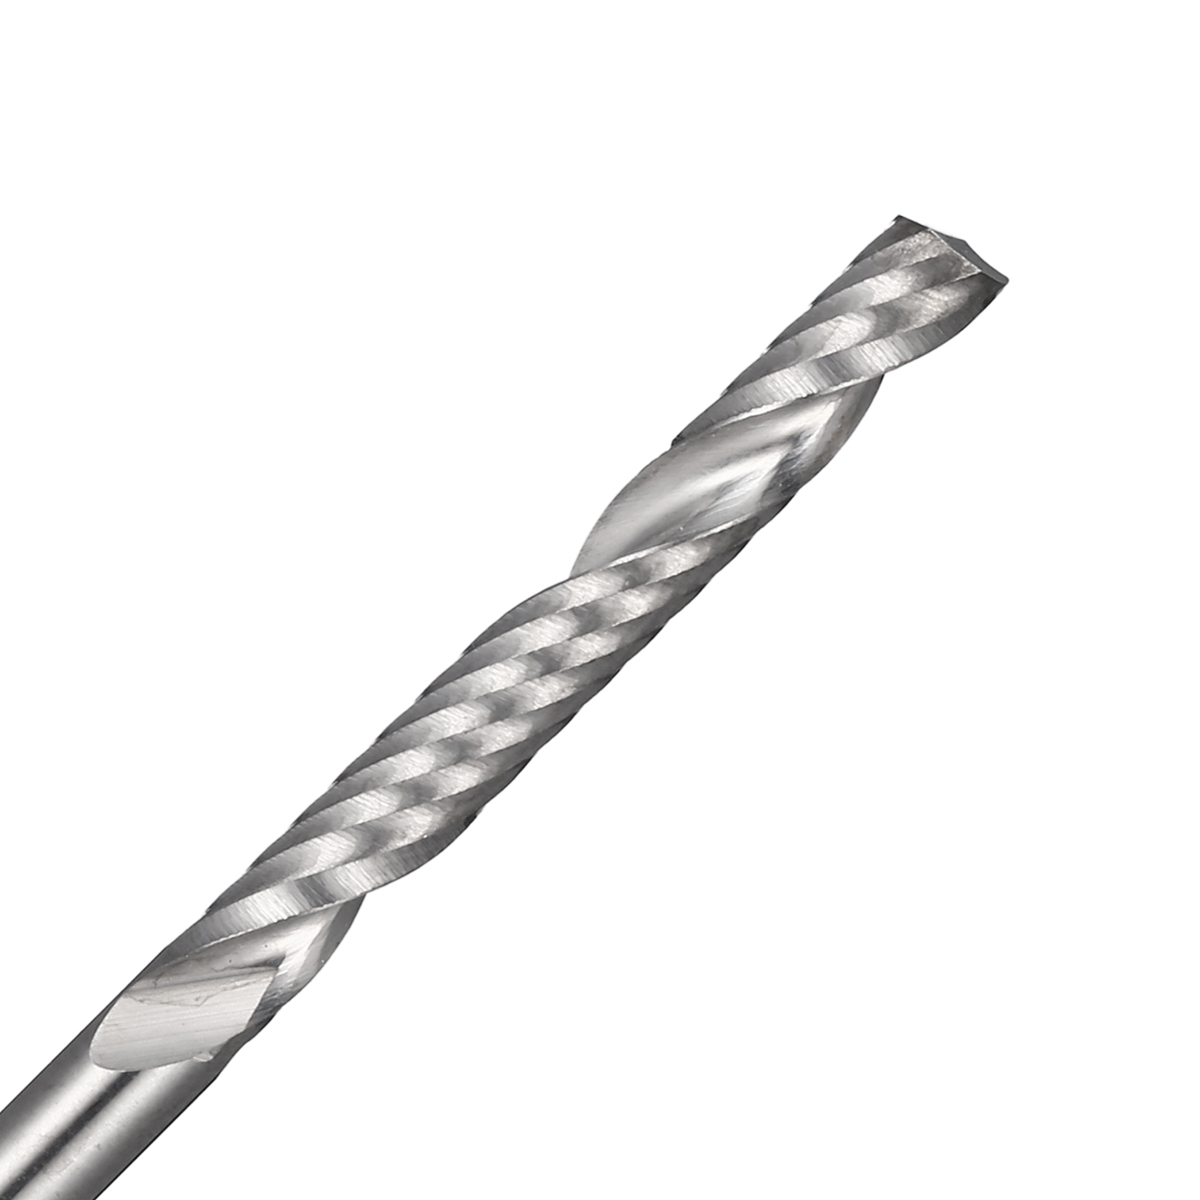 Drillpro-DB-M7-10pcs-18-Inch-Shank-End-Mill-Cutter-1-Flute-Carbide-Spiral-Milling-Cutter-1033261-8